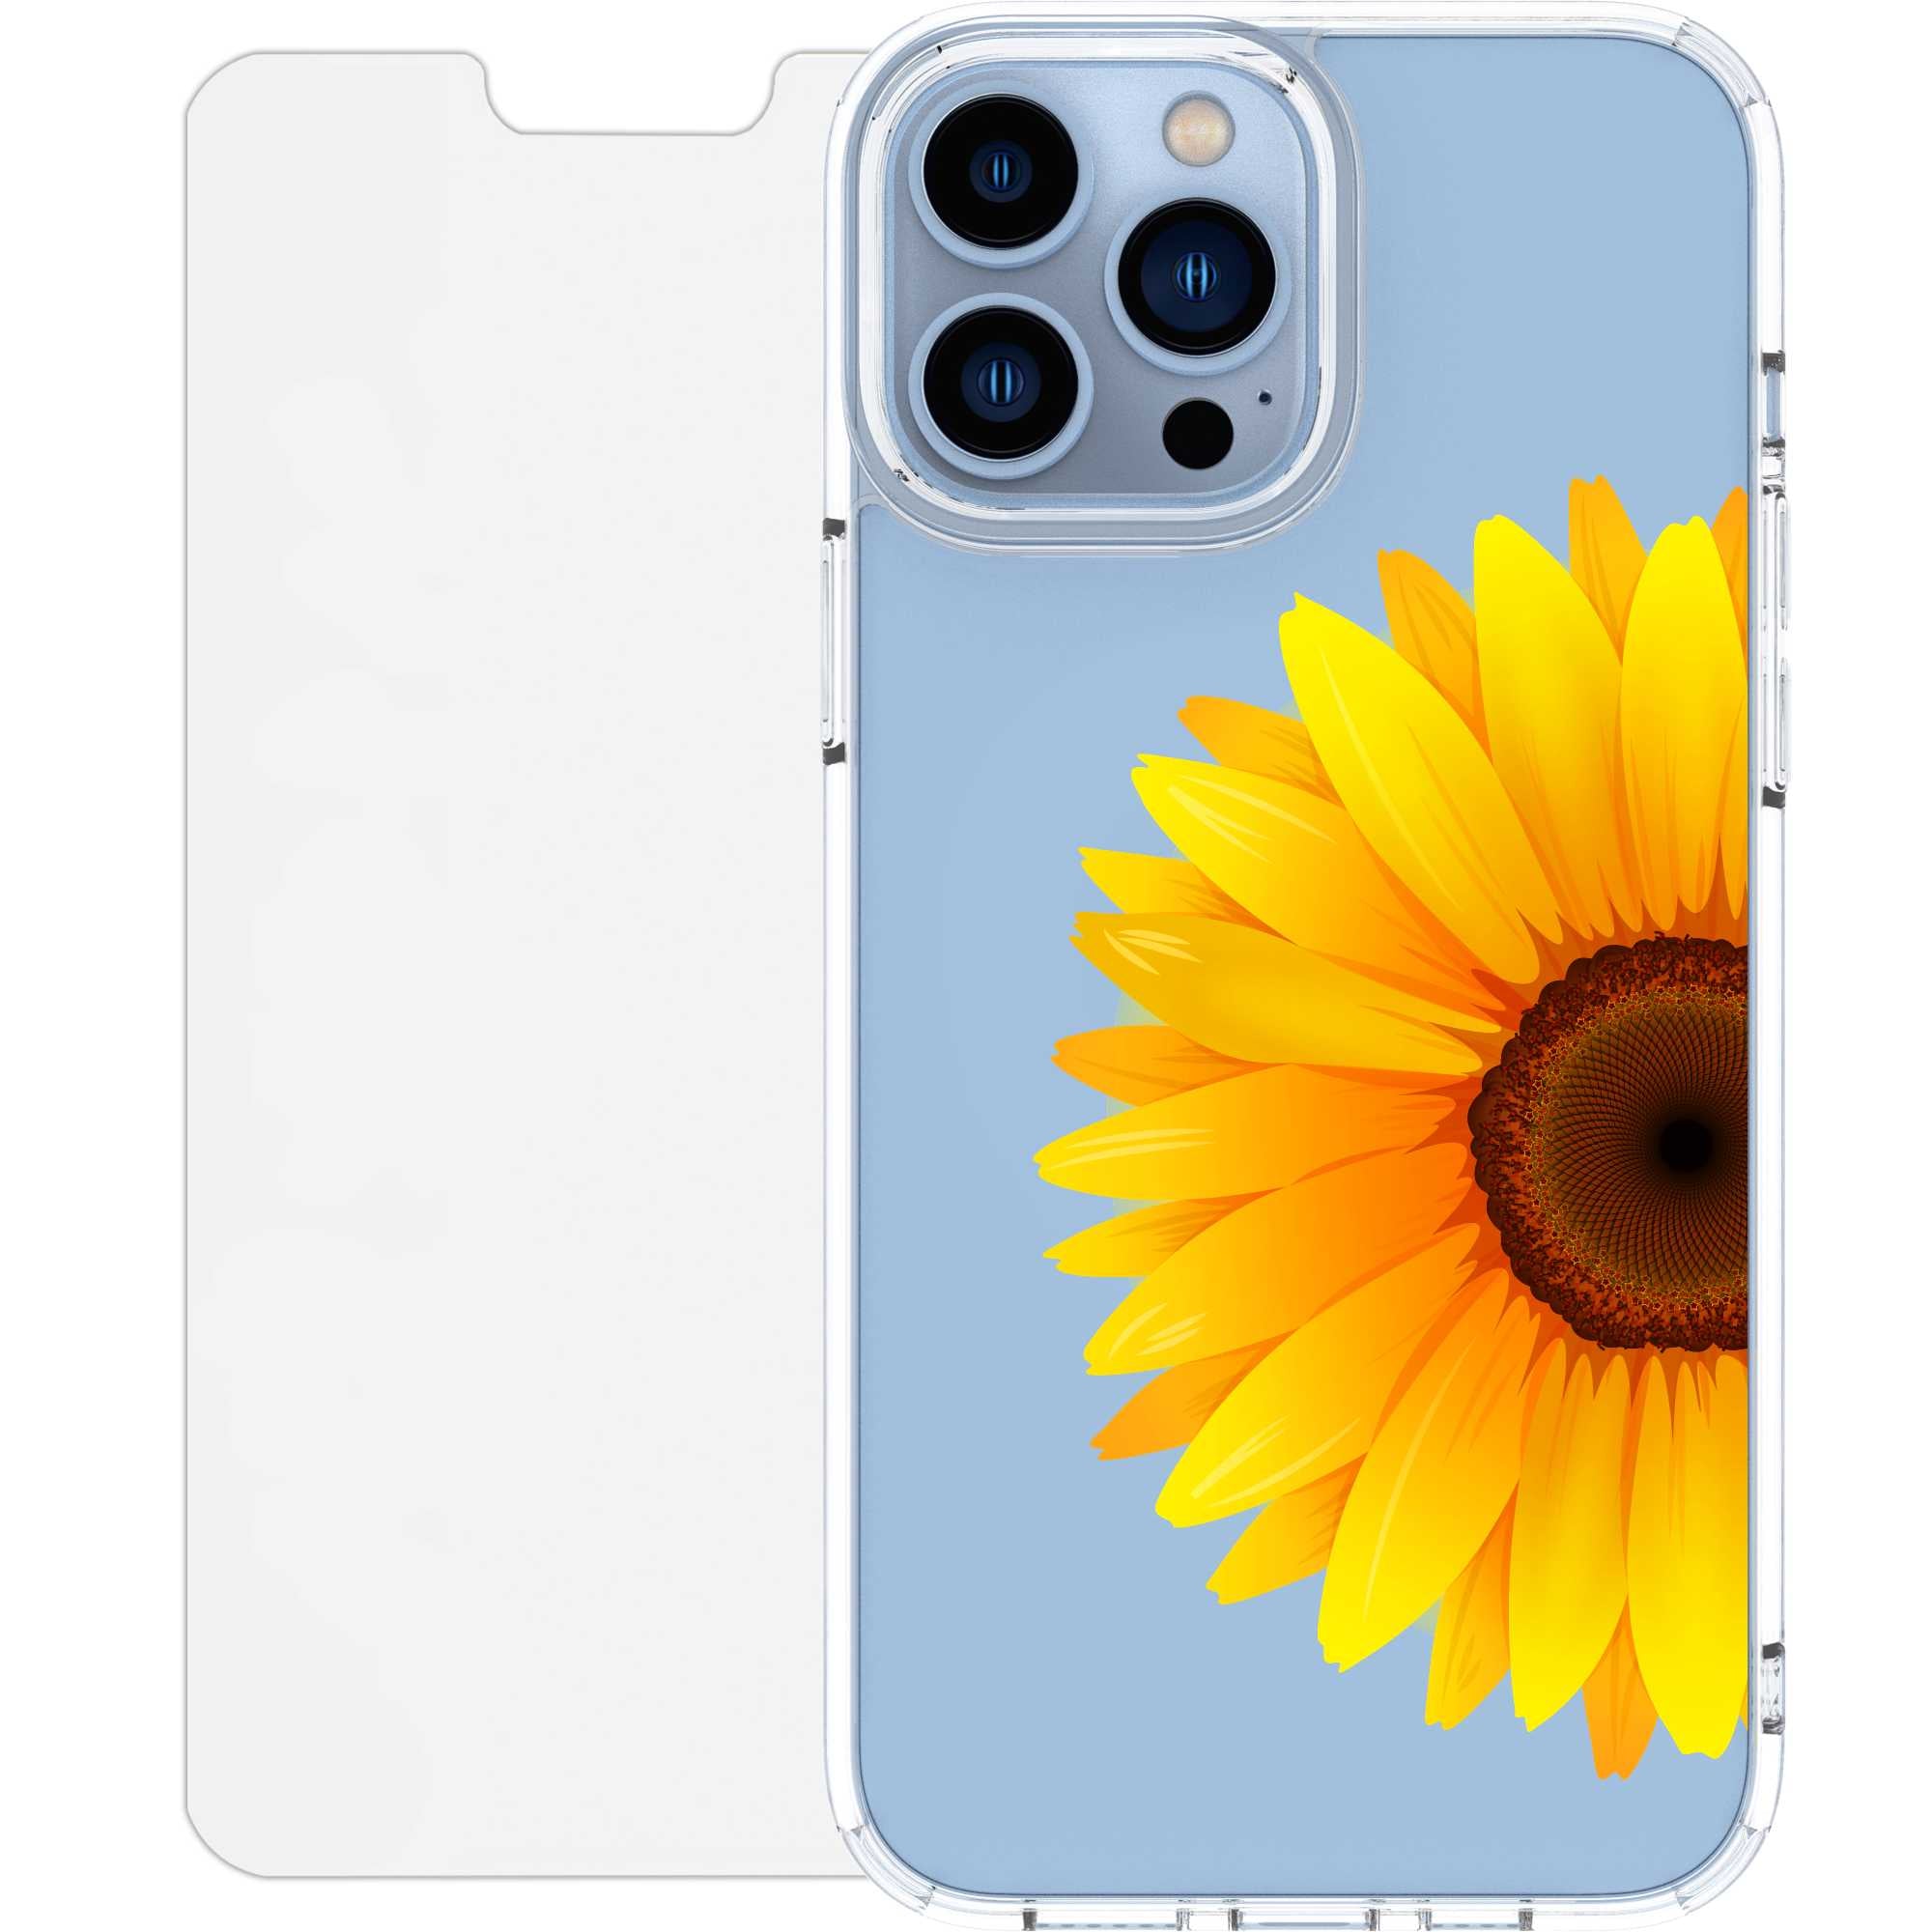 Scooch CrystalCase for iPhone 13 Pro Max Sunflower Scooch CrystalCase